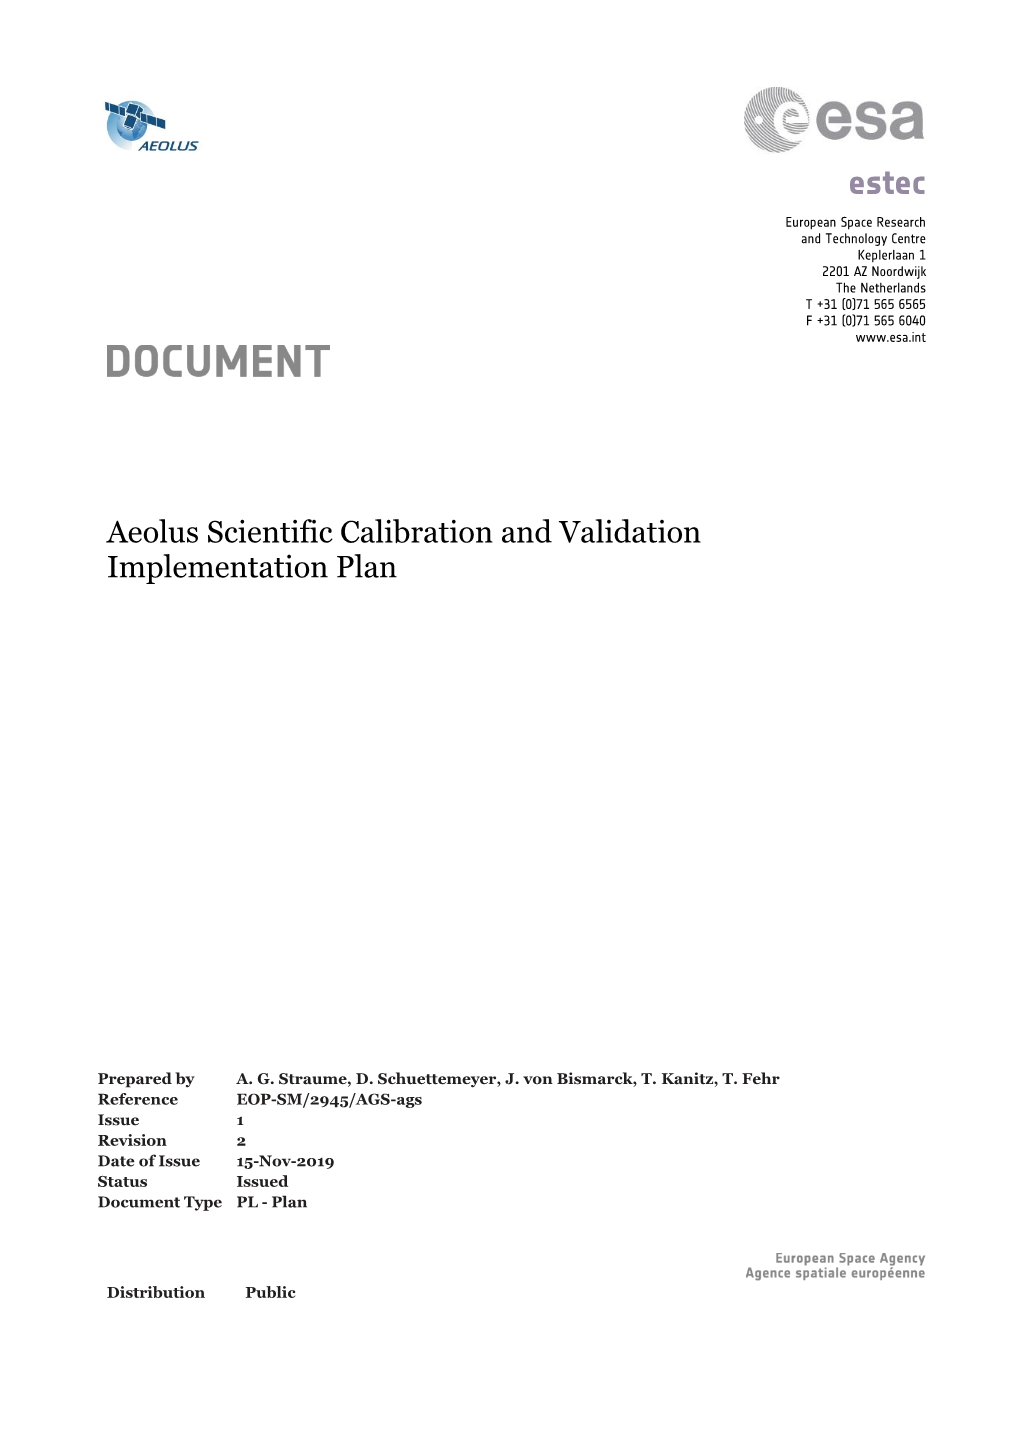 Aeolus Scientific Calibration and Validation Implementation Plan